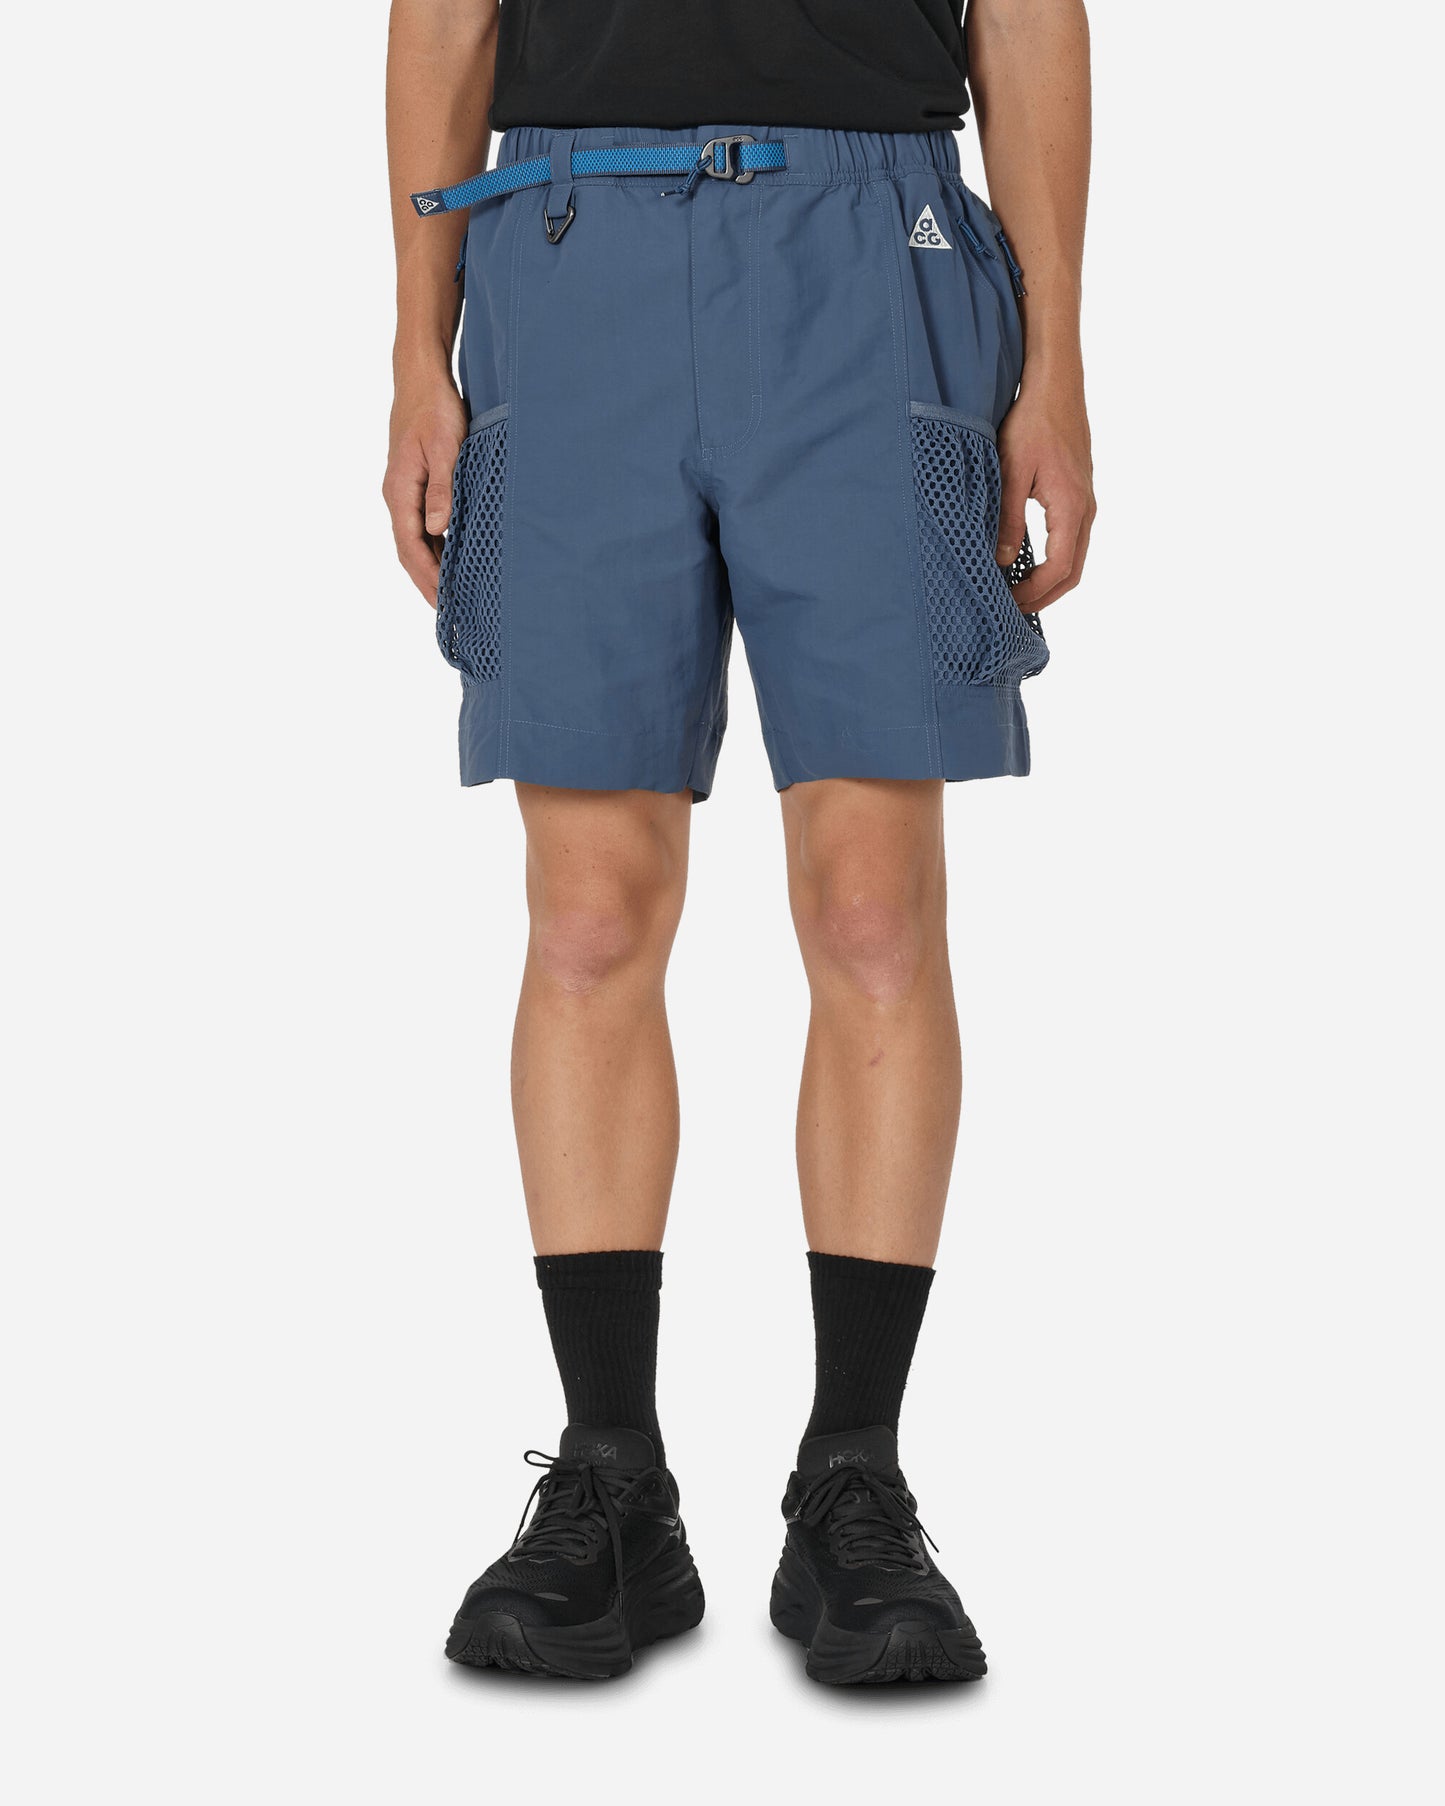 Nike Acg Snowgrass Cargo Short Diffused Blue/Summit White Shorts Short DV9405-491